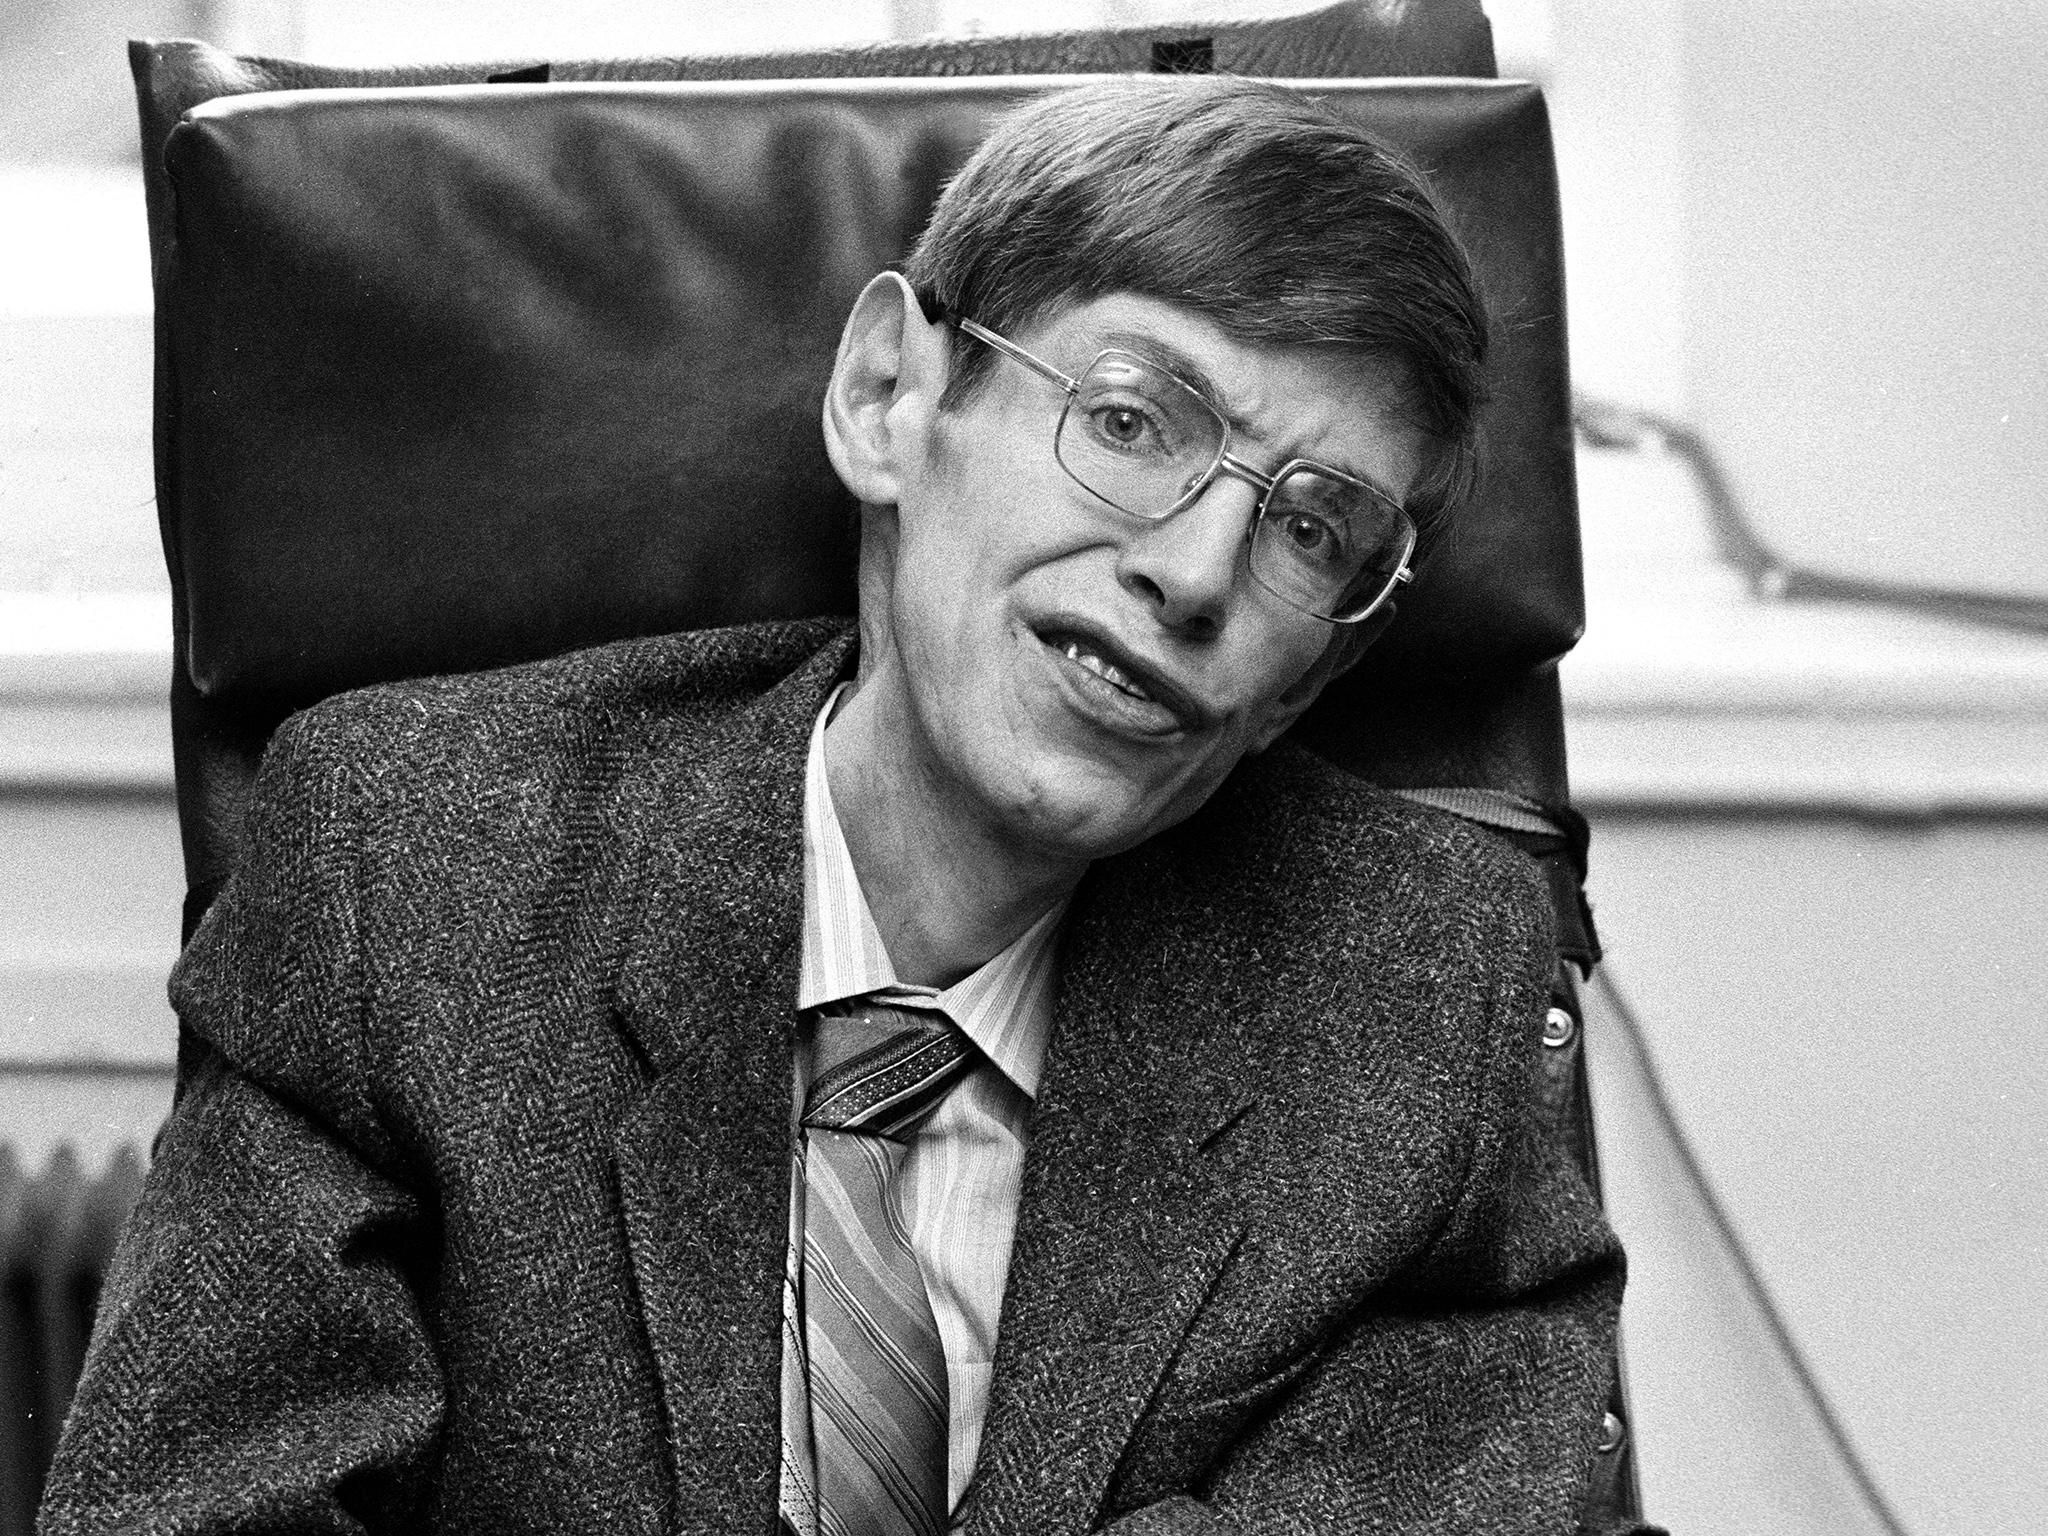 Hawking at Cambridge University in the 1980s